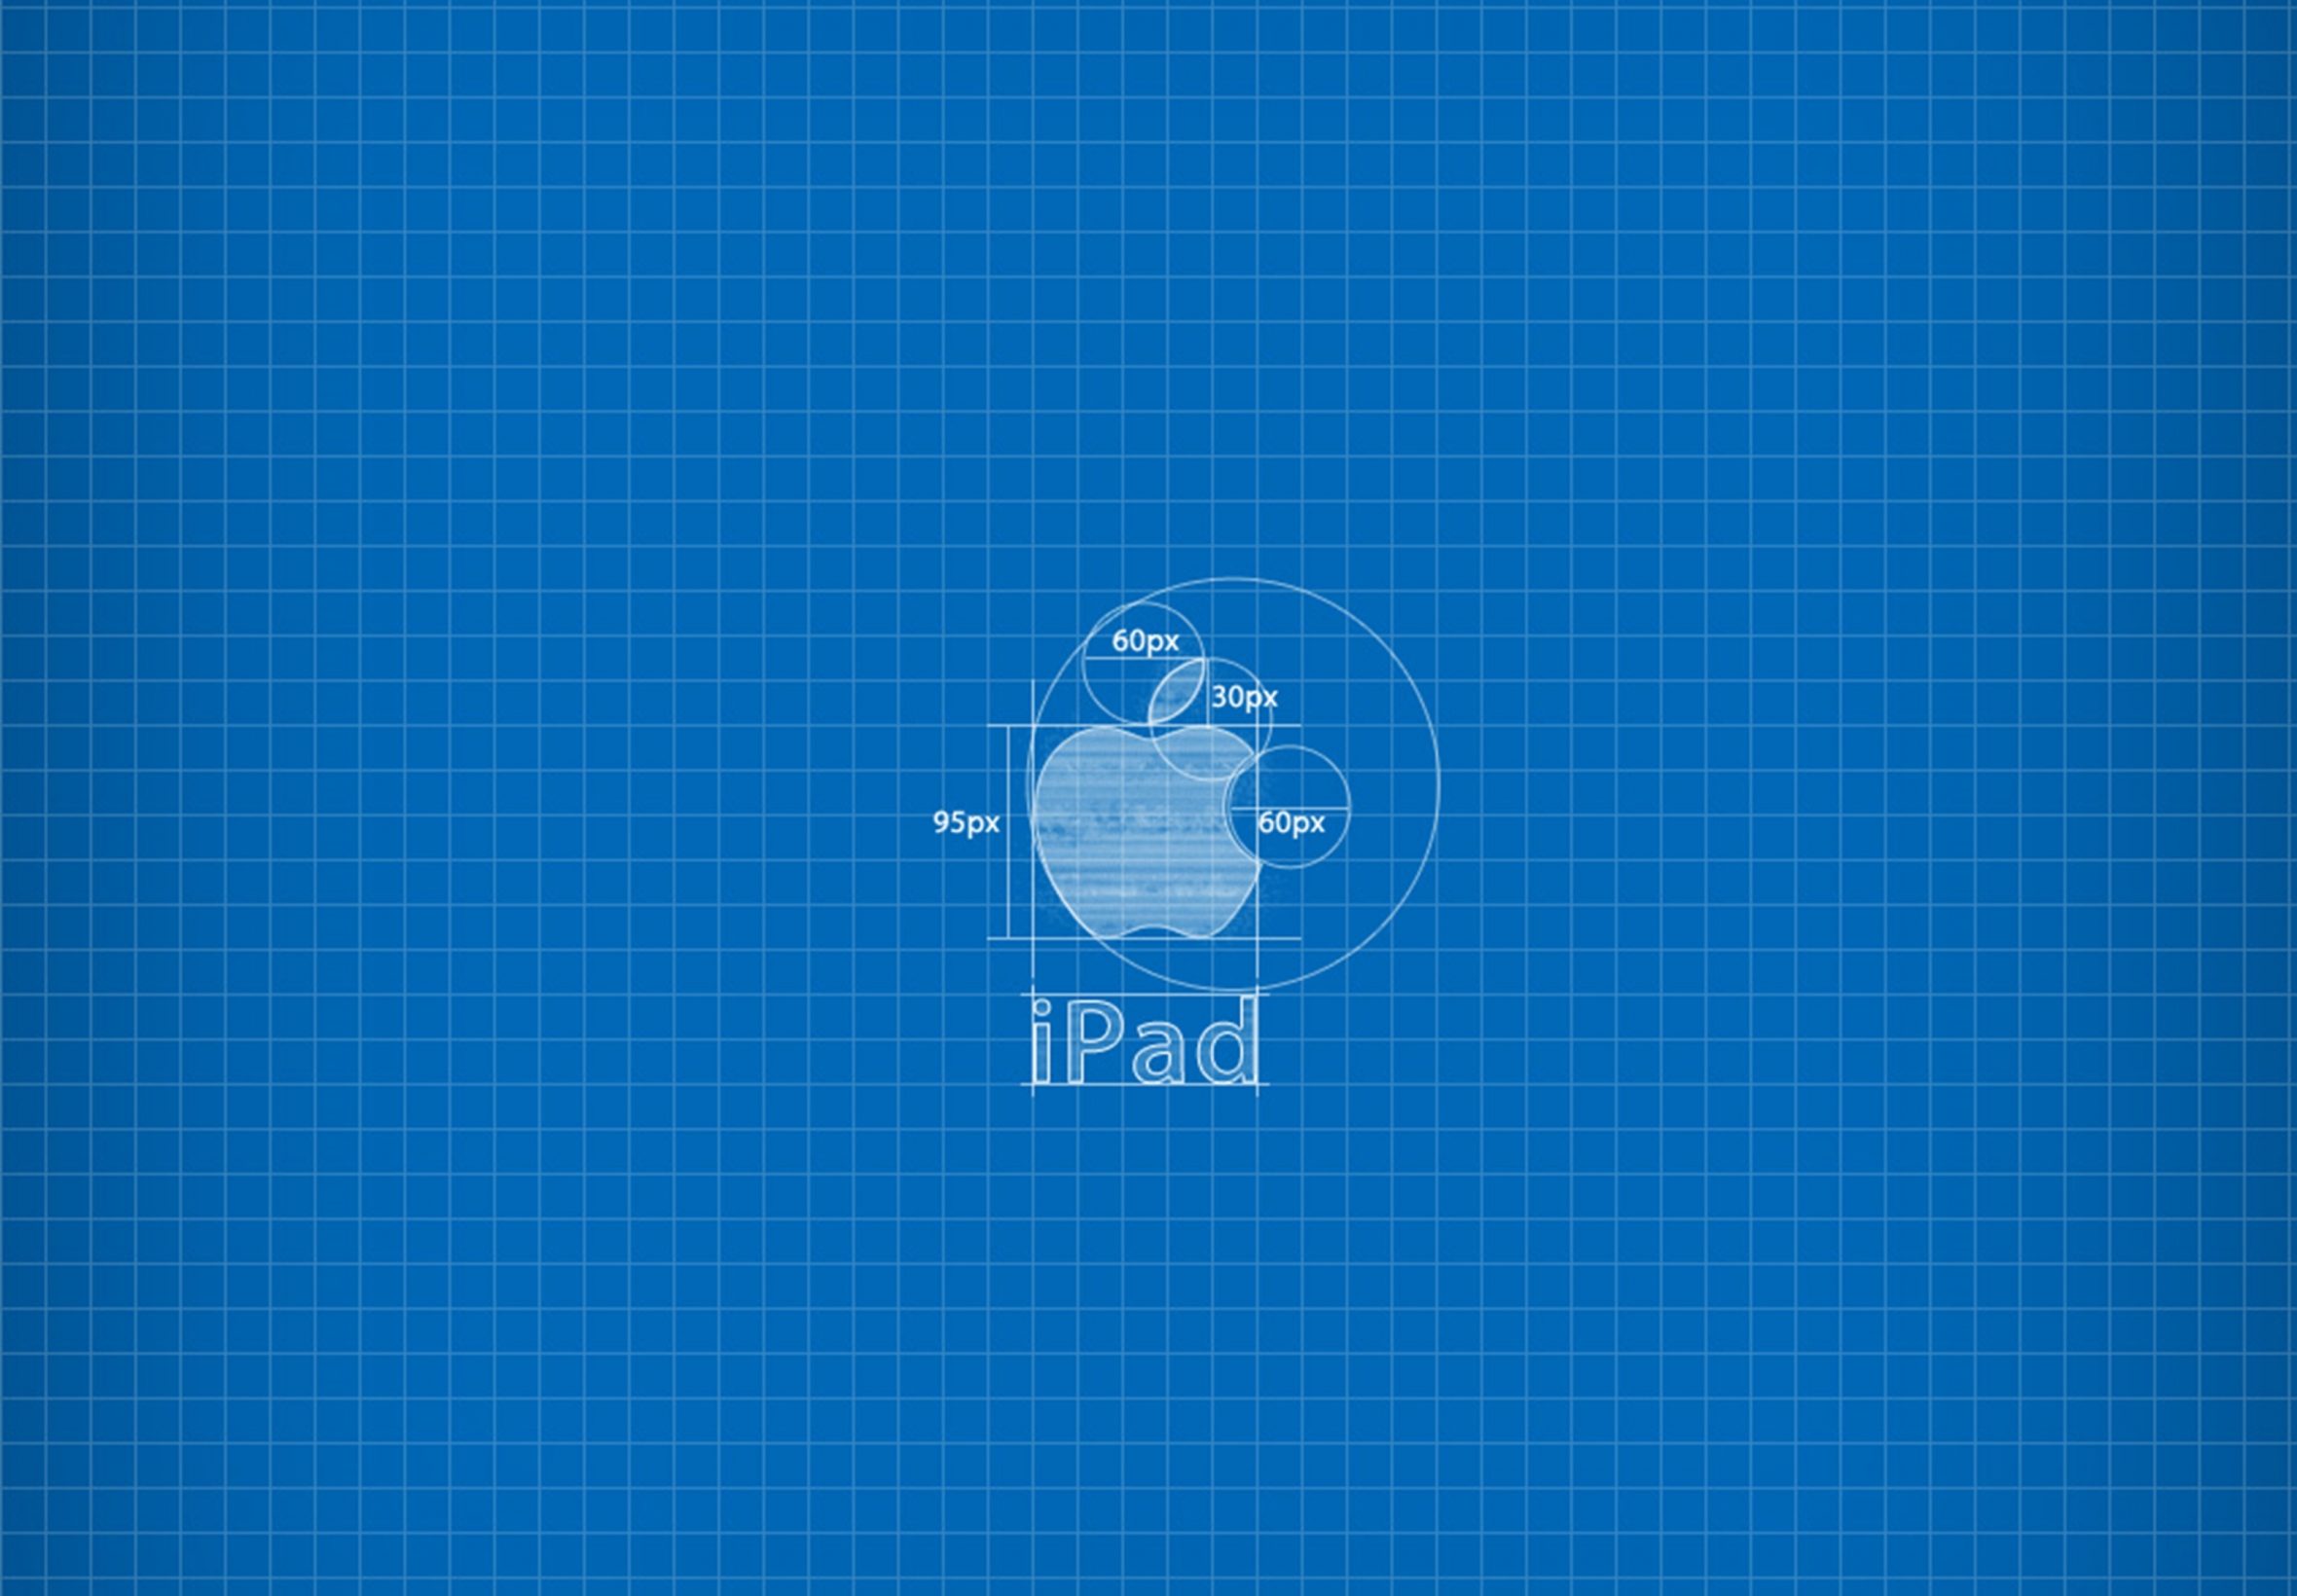 2360x1640 iPad Air wallpaper 4k Apple Blueprint Ipad Wallpaper 2360x1640 pixels resolution